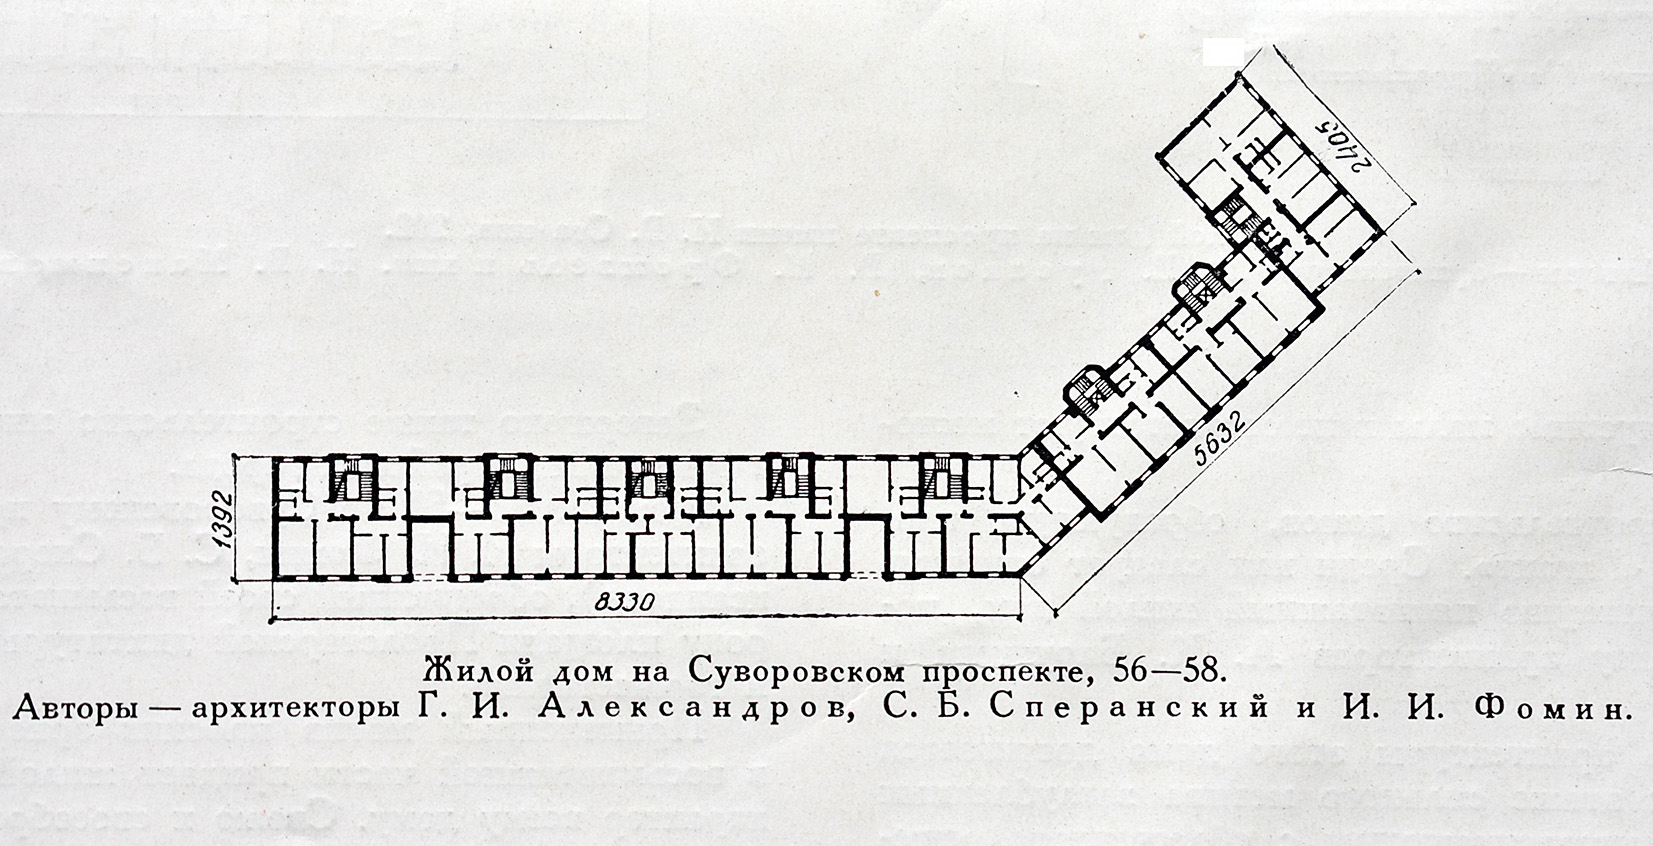 Sankt Petersburg, Суворовский проспект, 56. Sankt Petersburg — Drawings and Plans